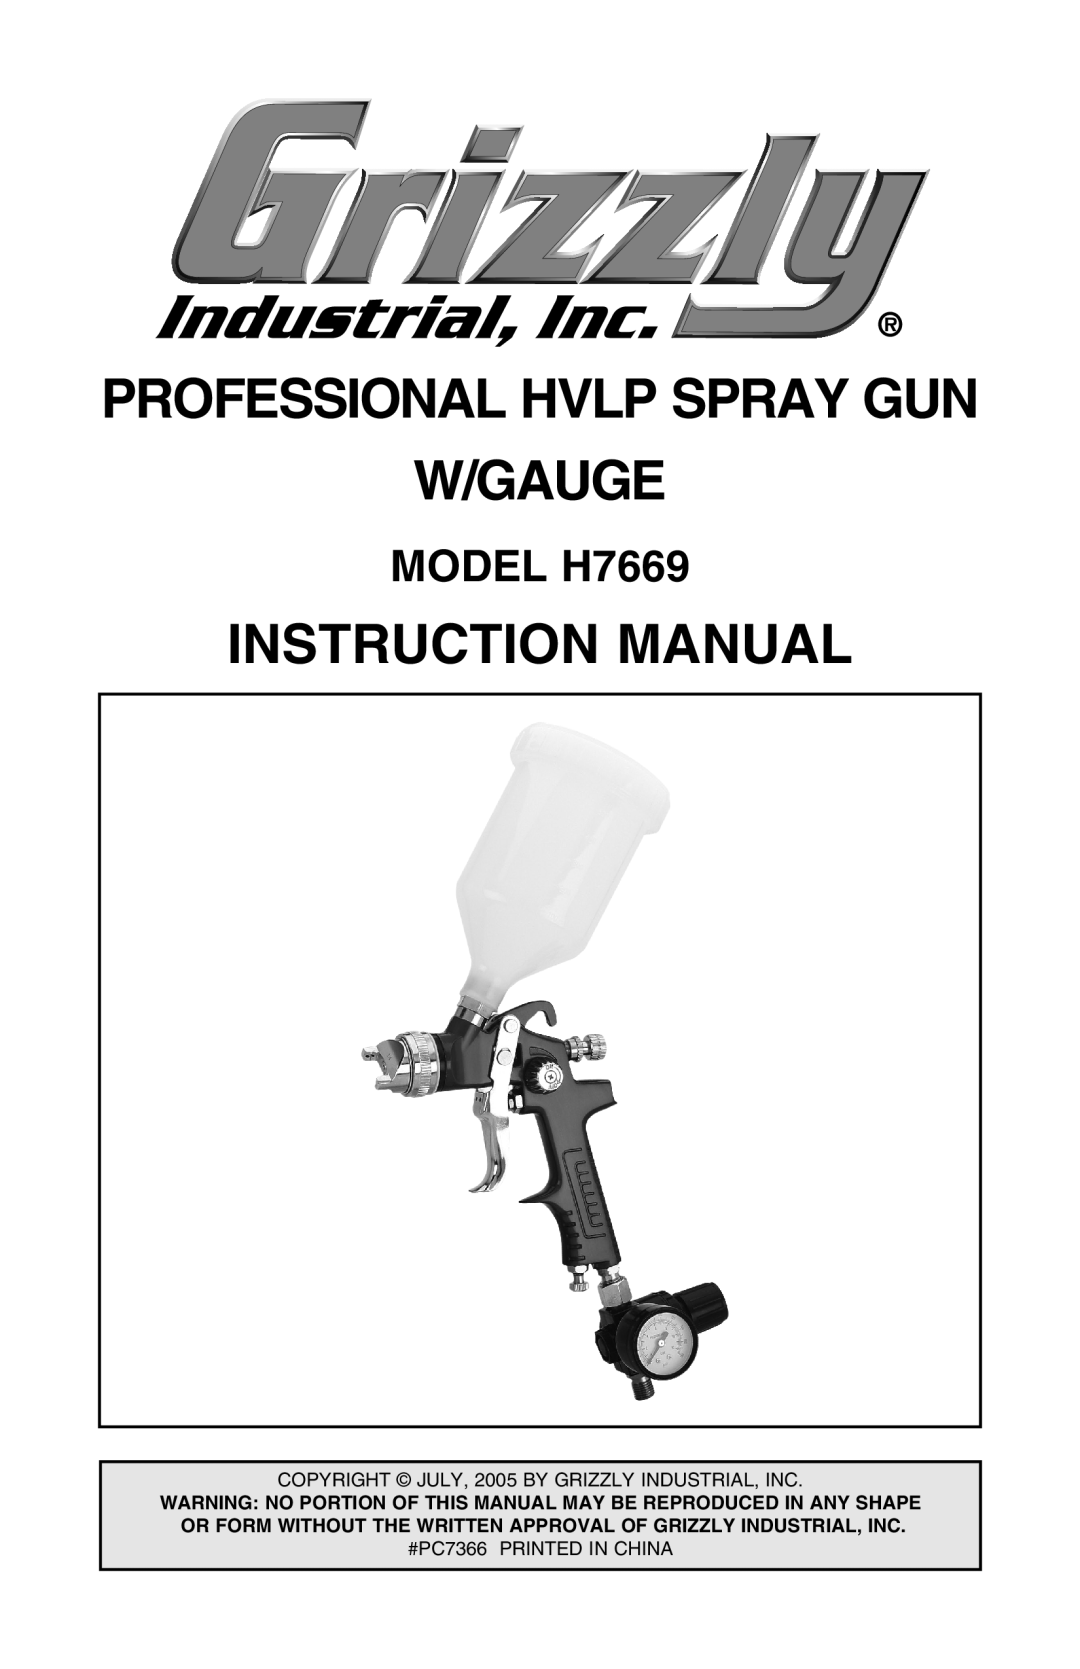 Grizzly instruction manual Professional Hvlp Spray Gun, W/Gauge, MODEL H7669 